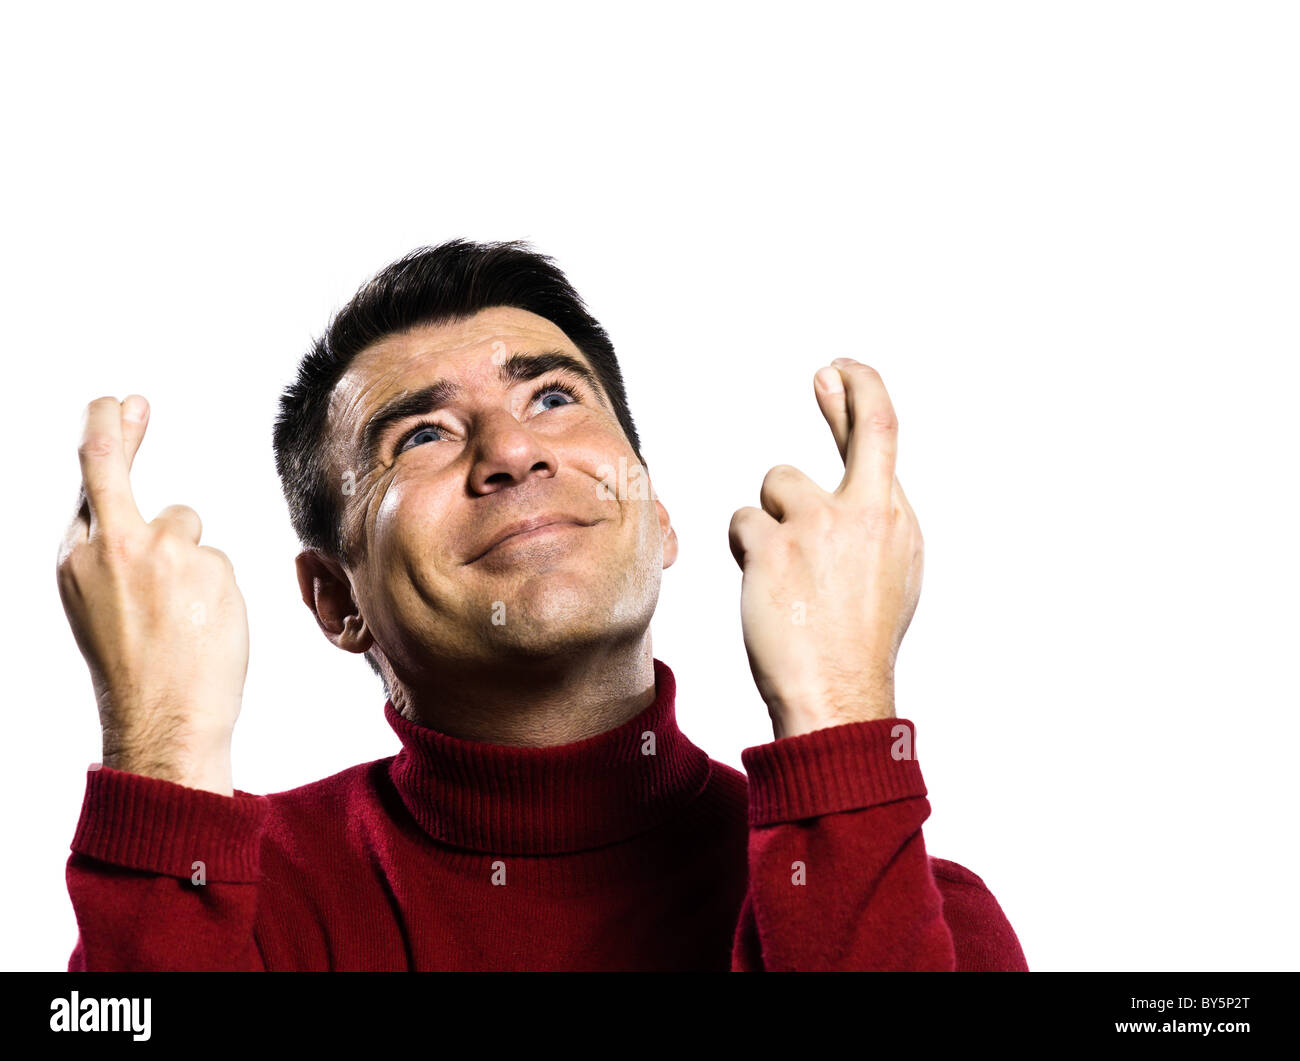 caucasian man finger crossed gesture studio portrait on isolated white backgound Stock Photo